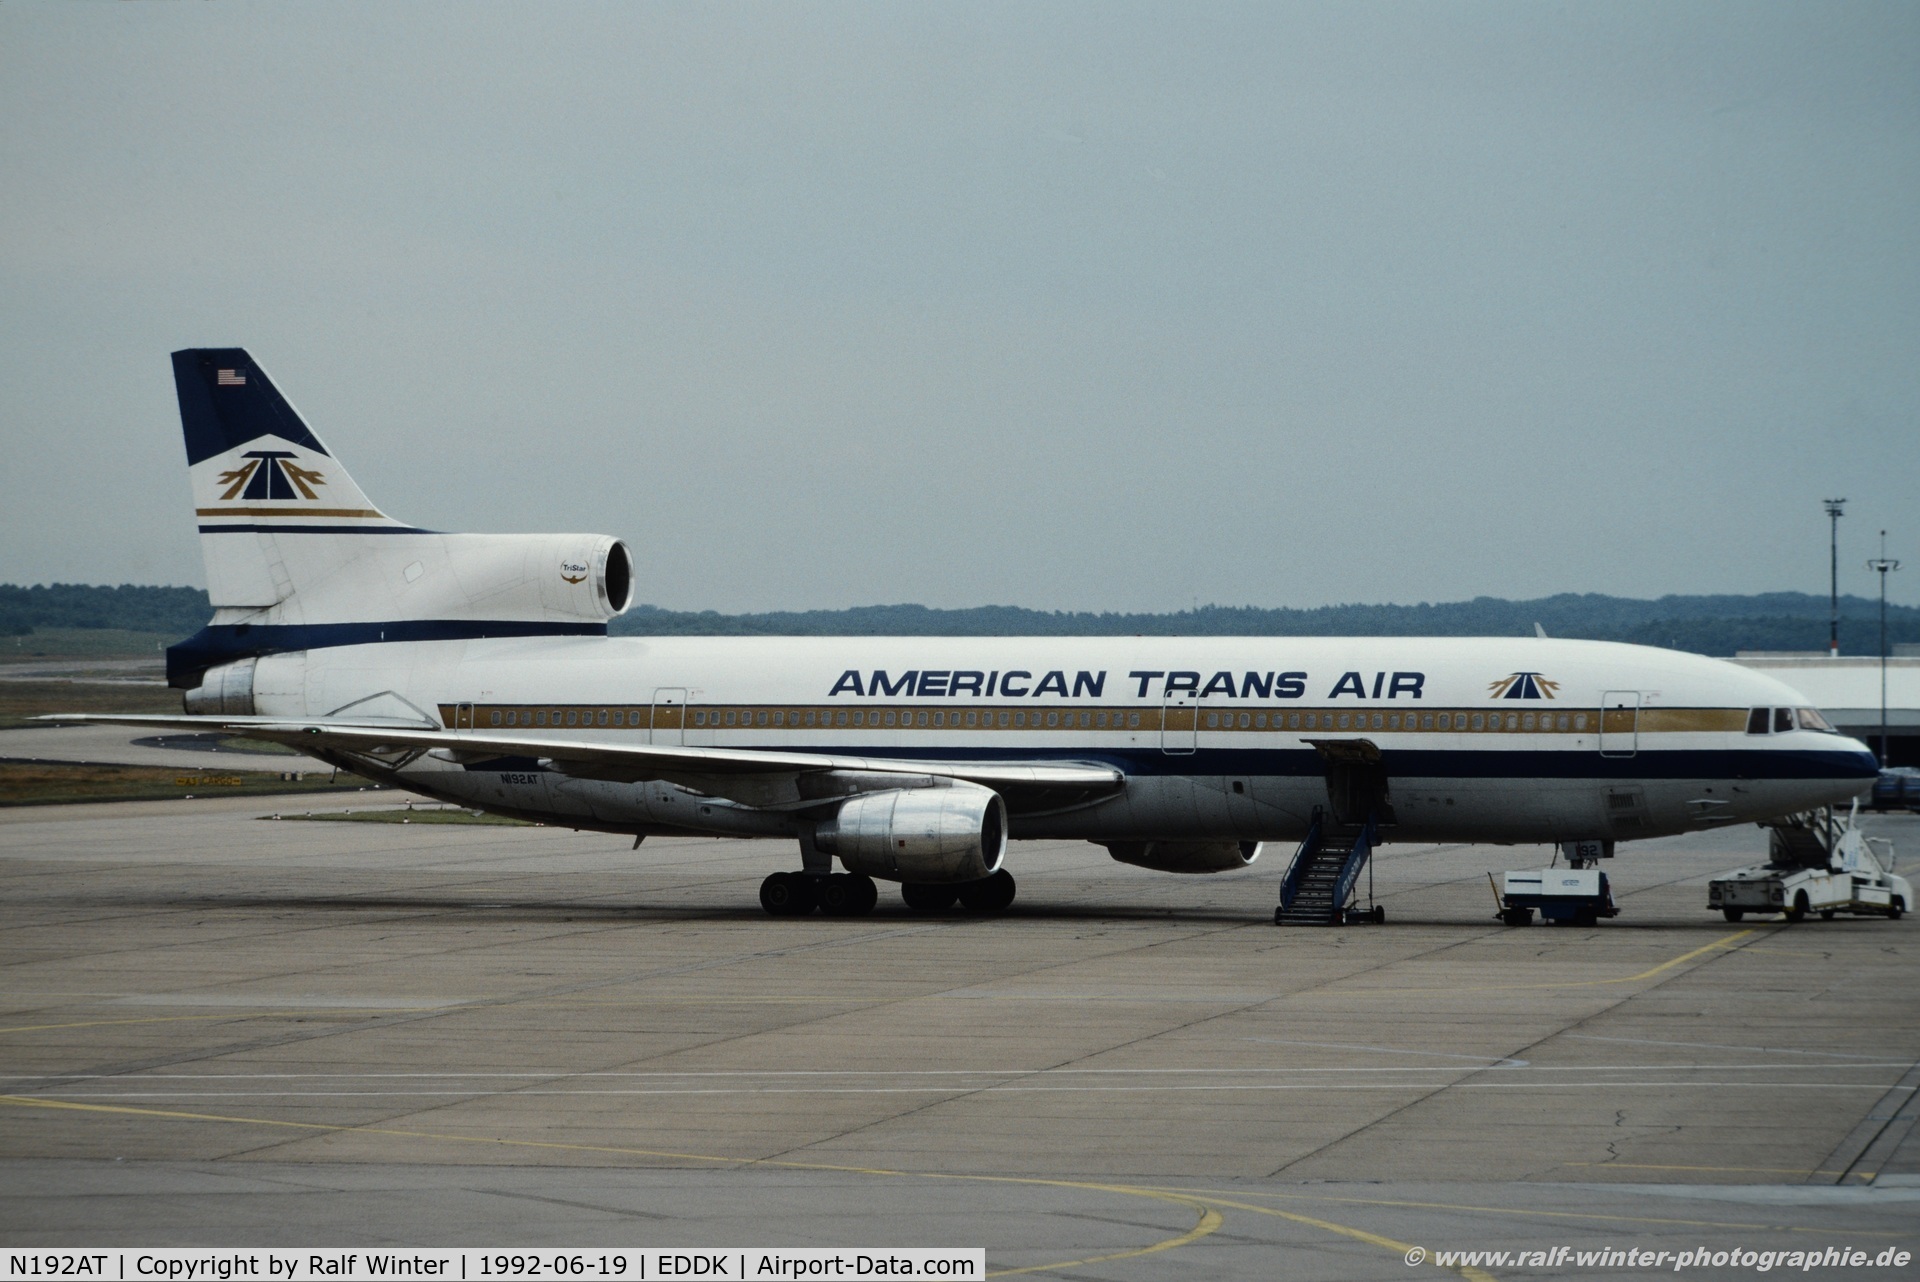 N192AT, 1973 Lockheed L-1011-385-1 TriStar 50 C/N 193C-1057, Lockheed L-1011 TriStar 50 - American Trans Air - N192AT - 19.06.1992 - CGN